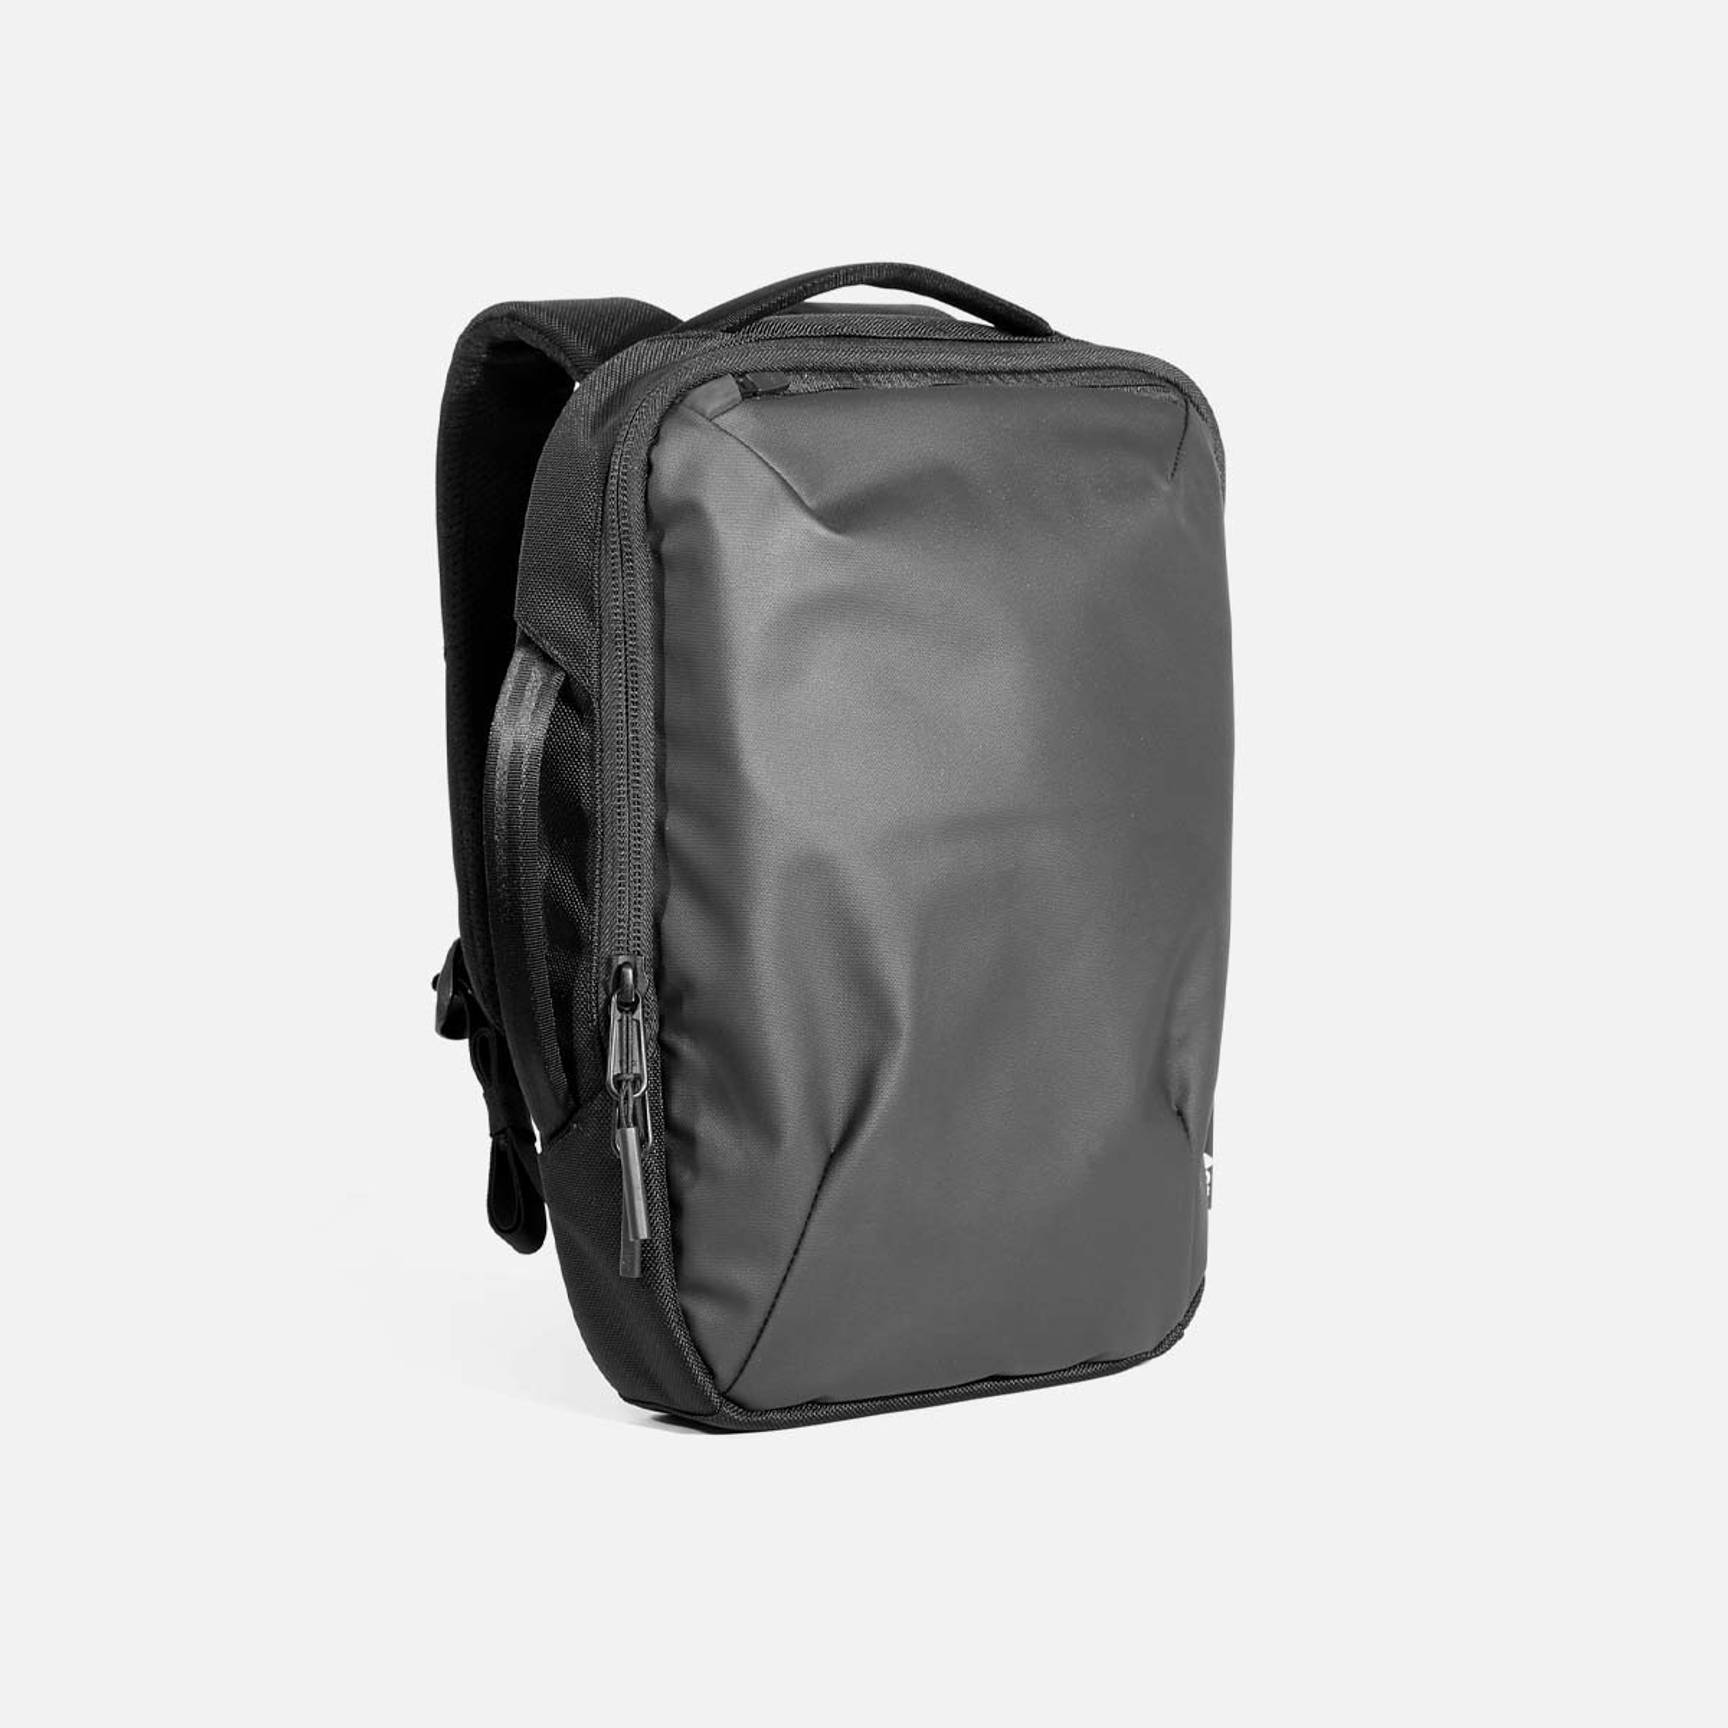 1.5 x 1 inch Black Color Small Ziplock Bags